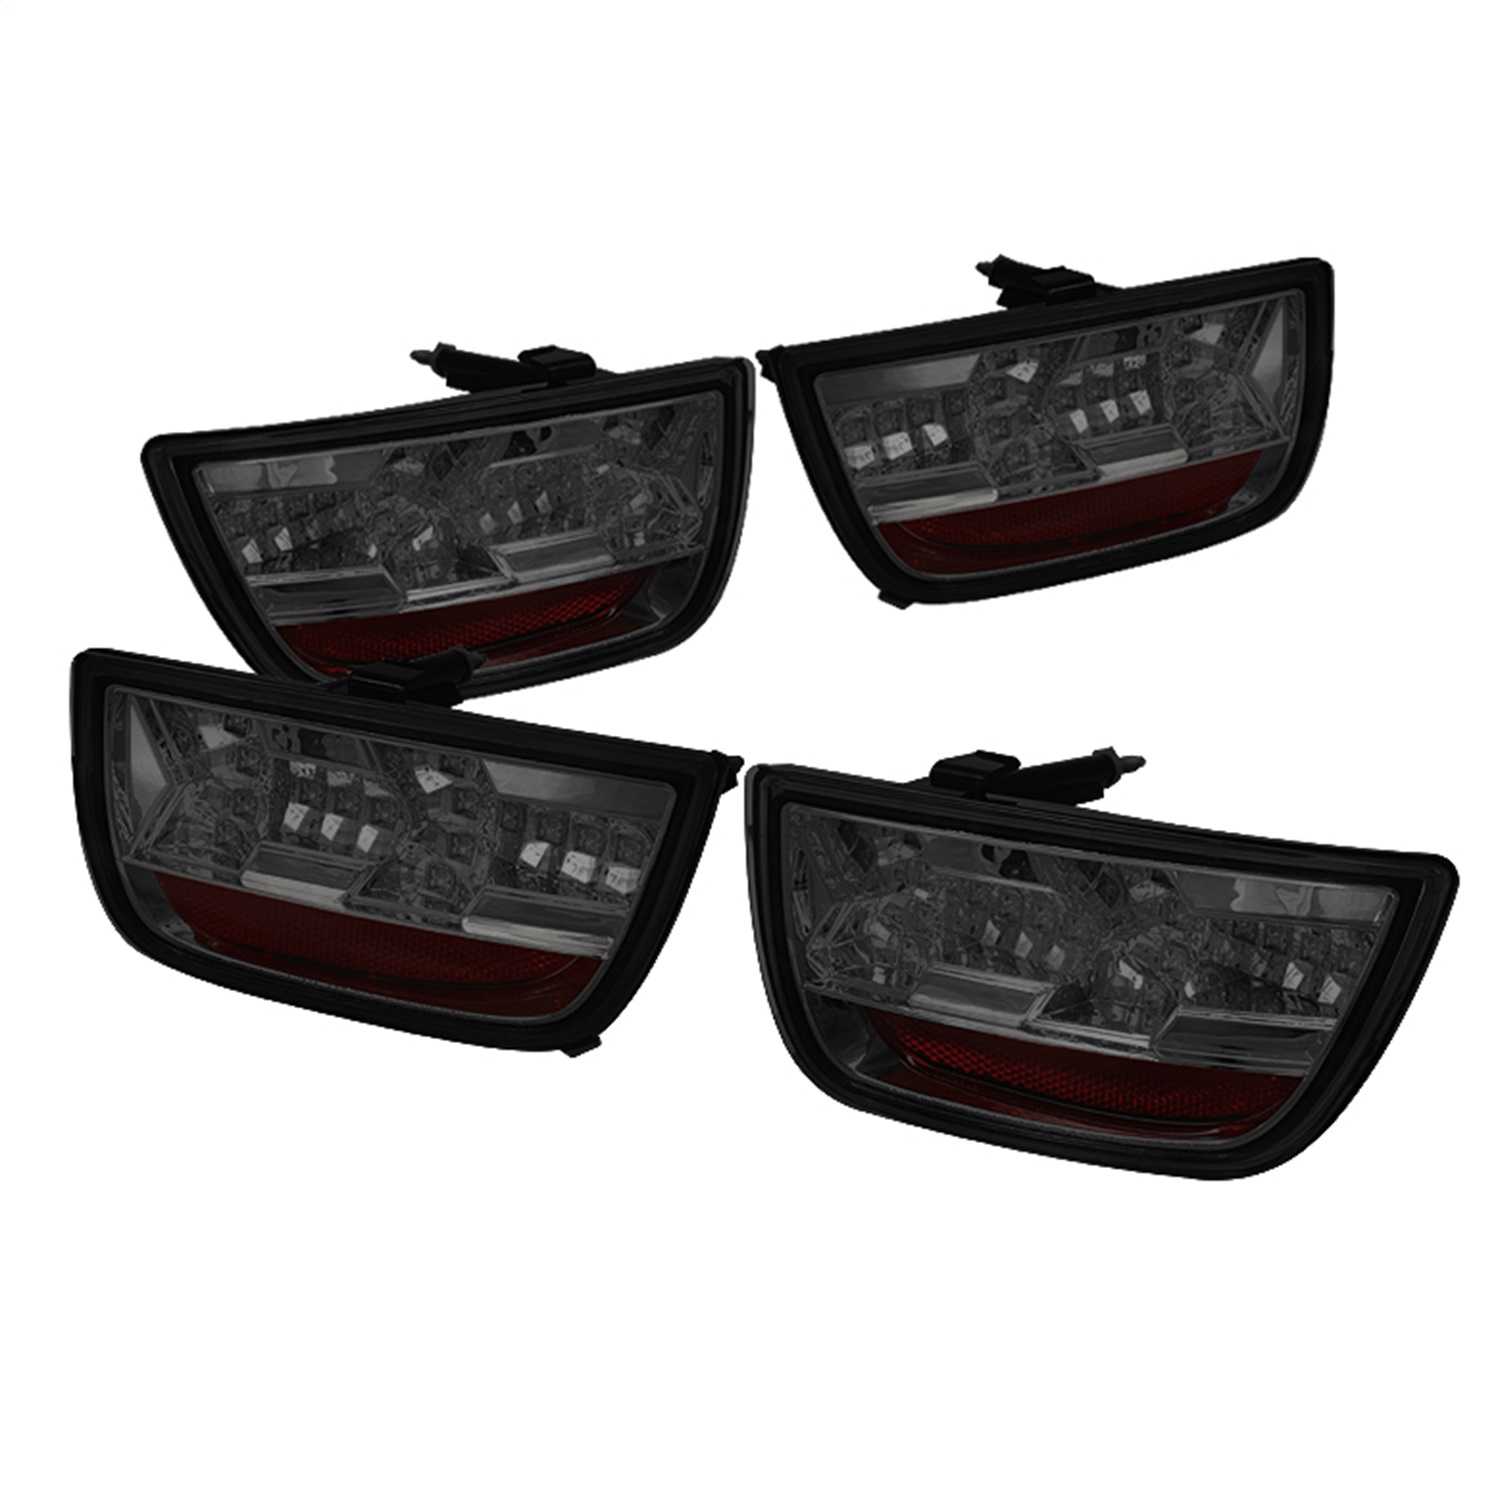 Spyder Auto 5032201 LED Tail Lights Fits 10-13 Camaro